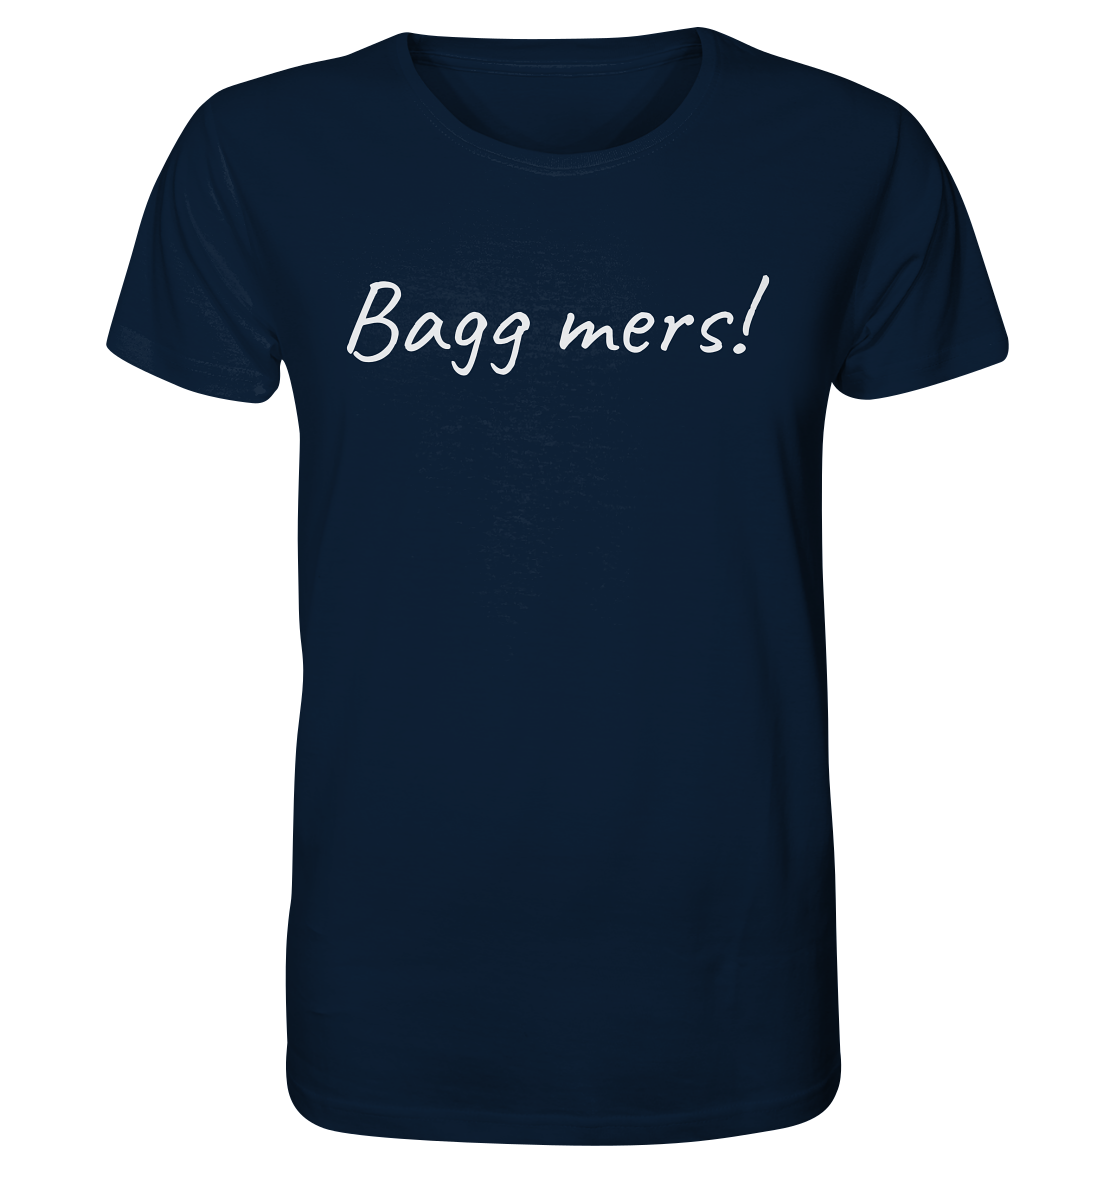 #Bagg mers! - Organic Shirt